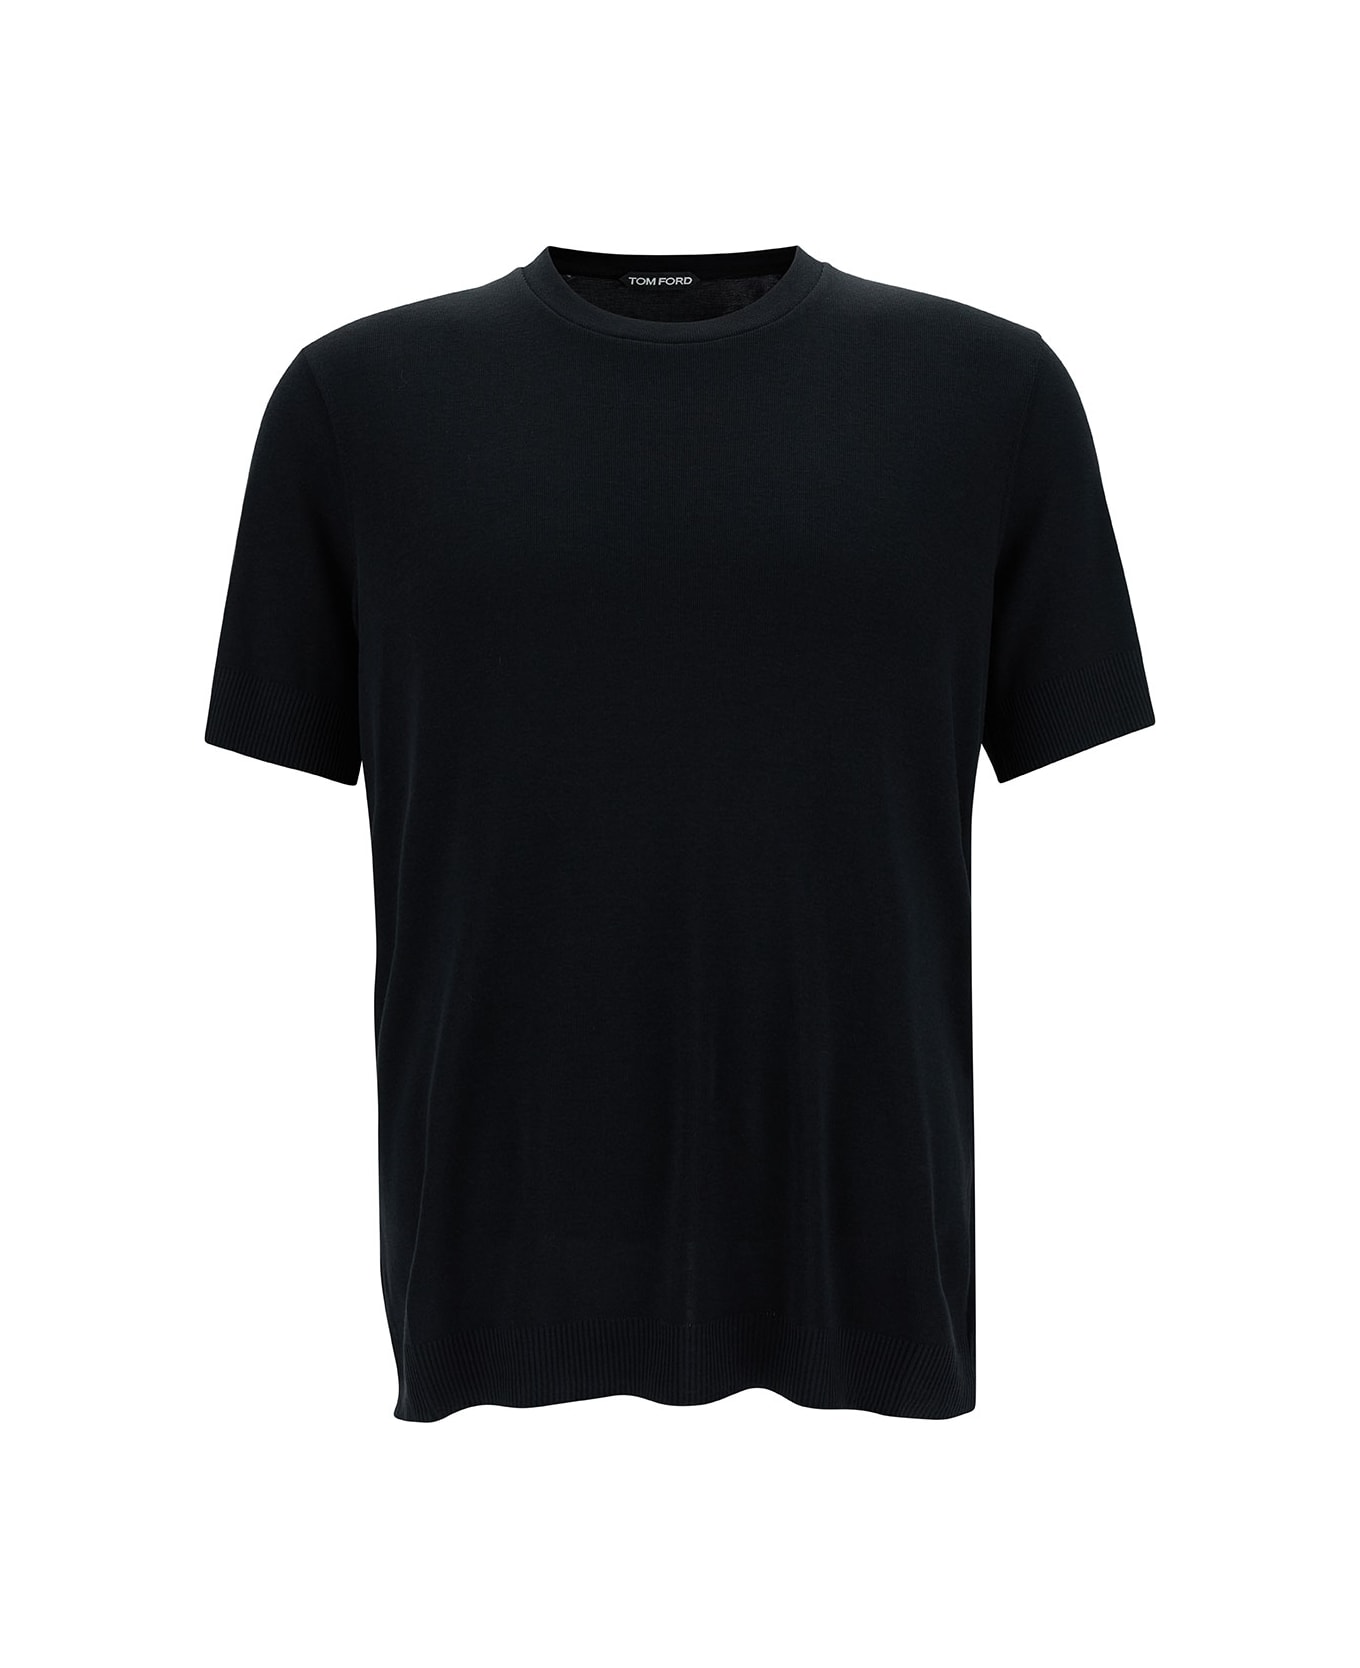 Tom Ford T-shirt Knit - Black